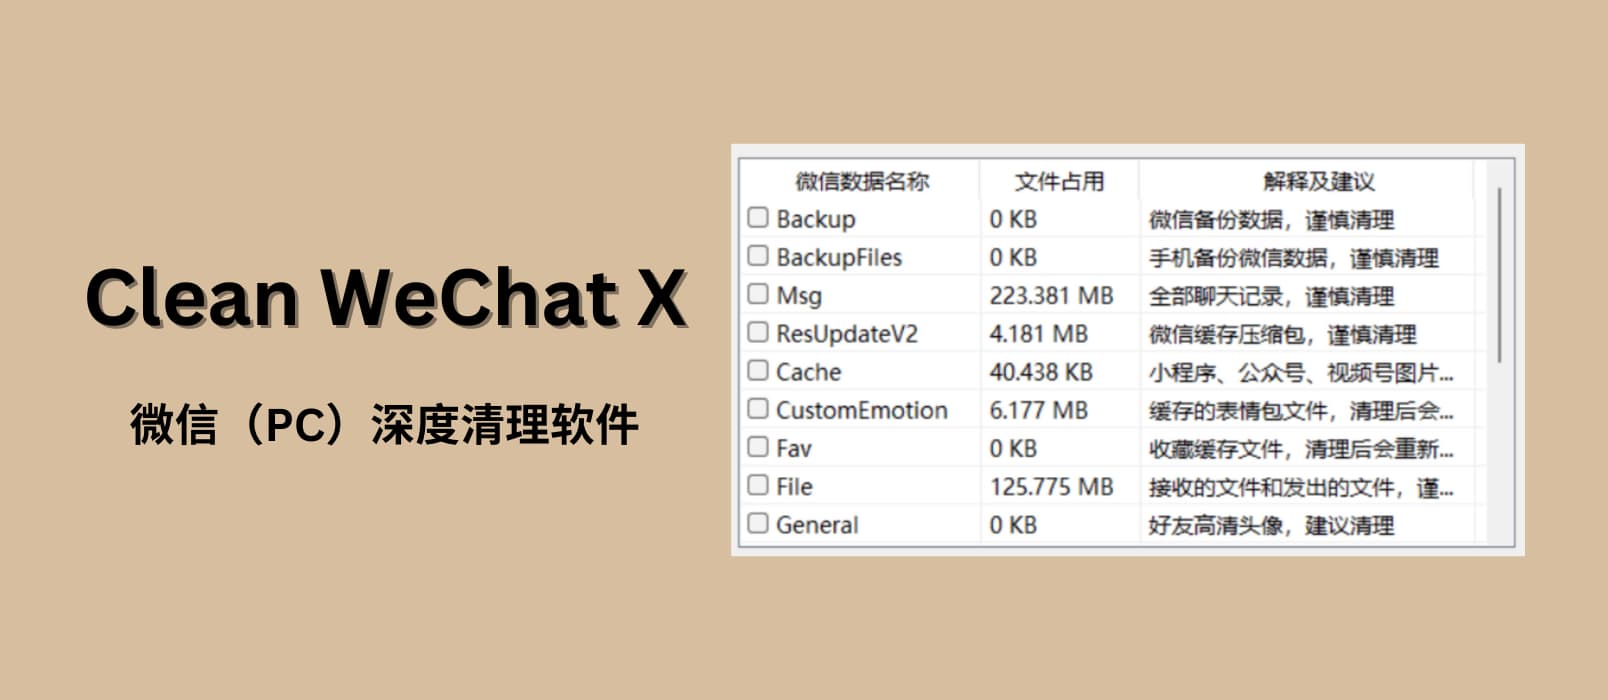 Clean WeChat X - 微信（PC）深度清理软件 7